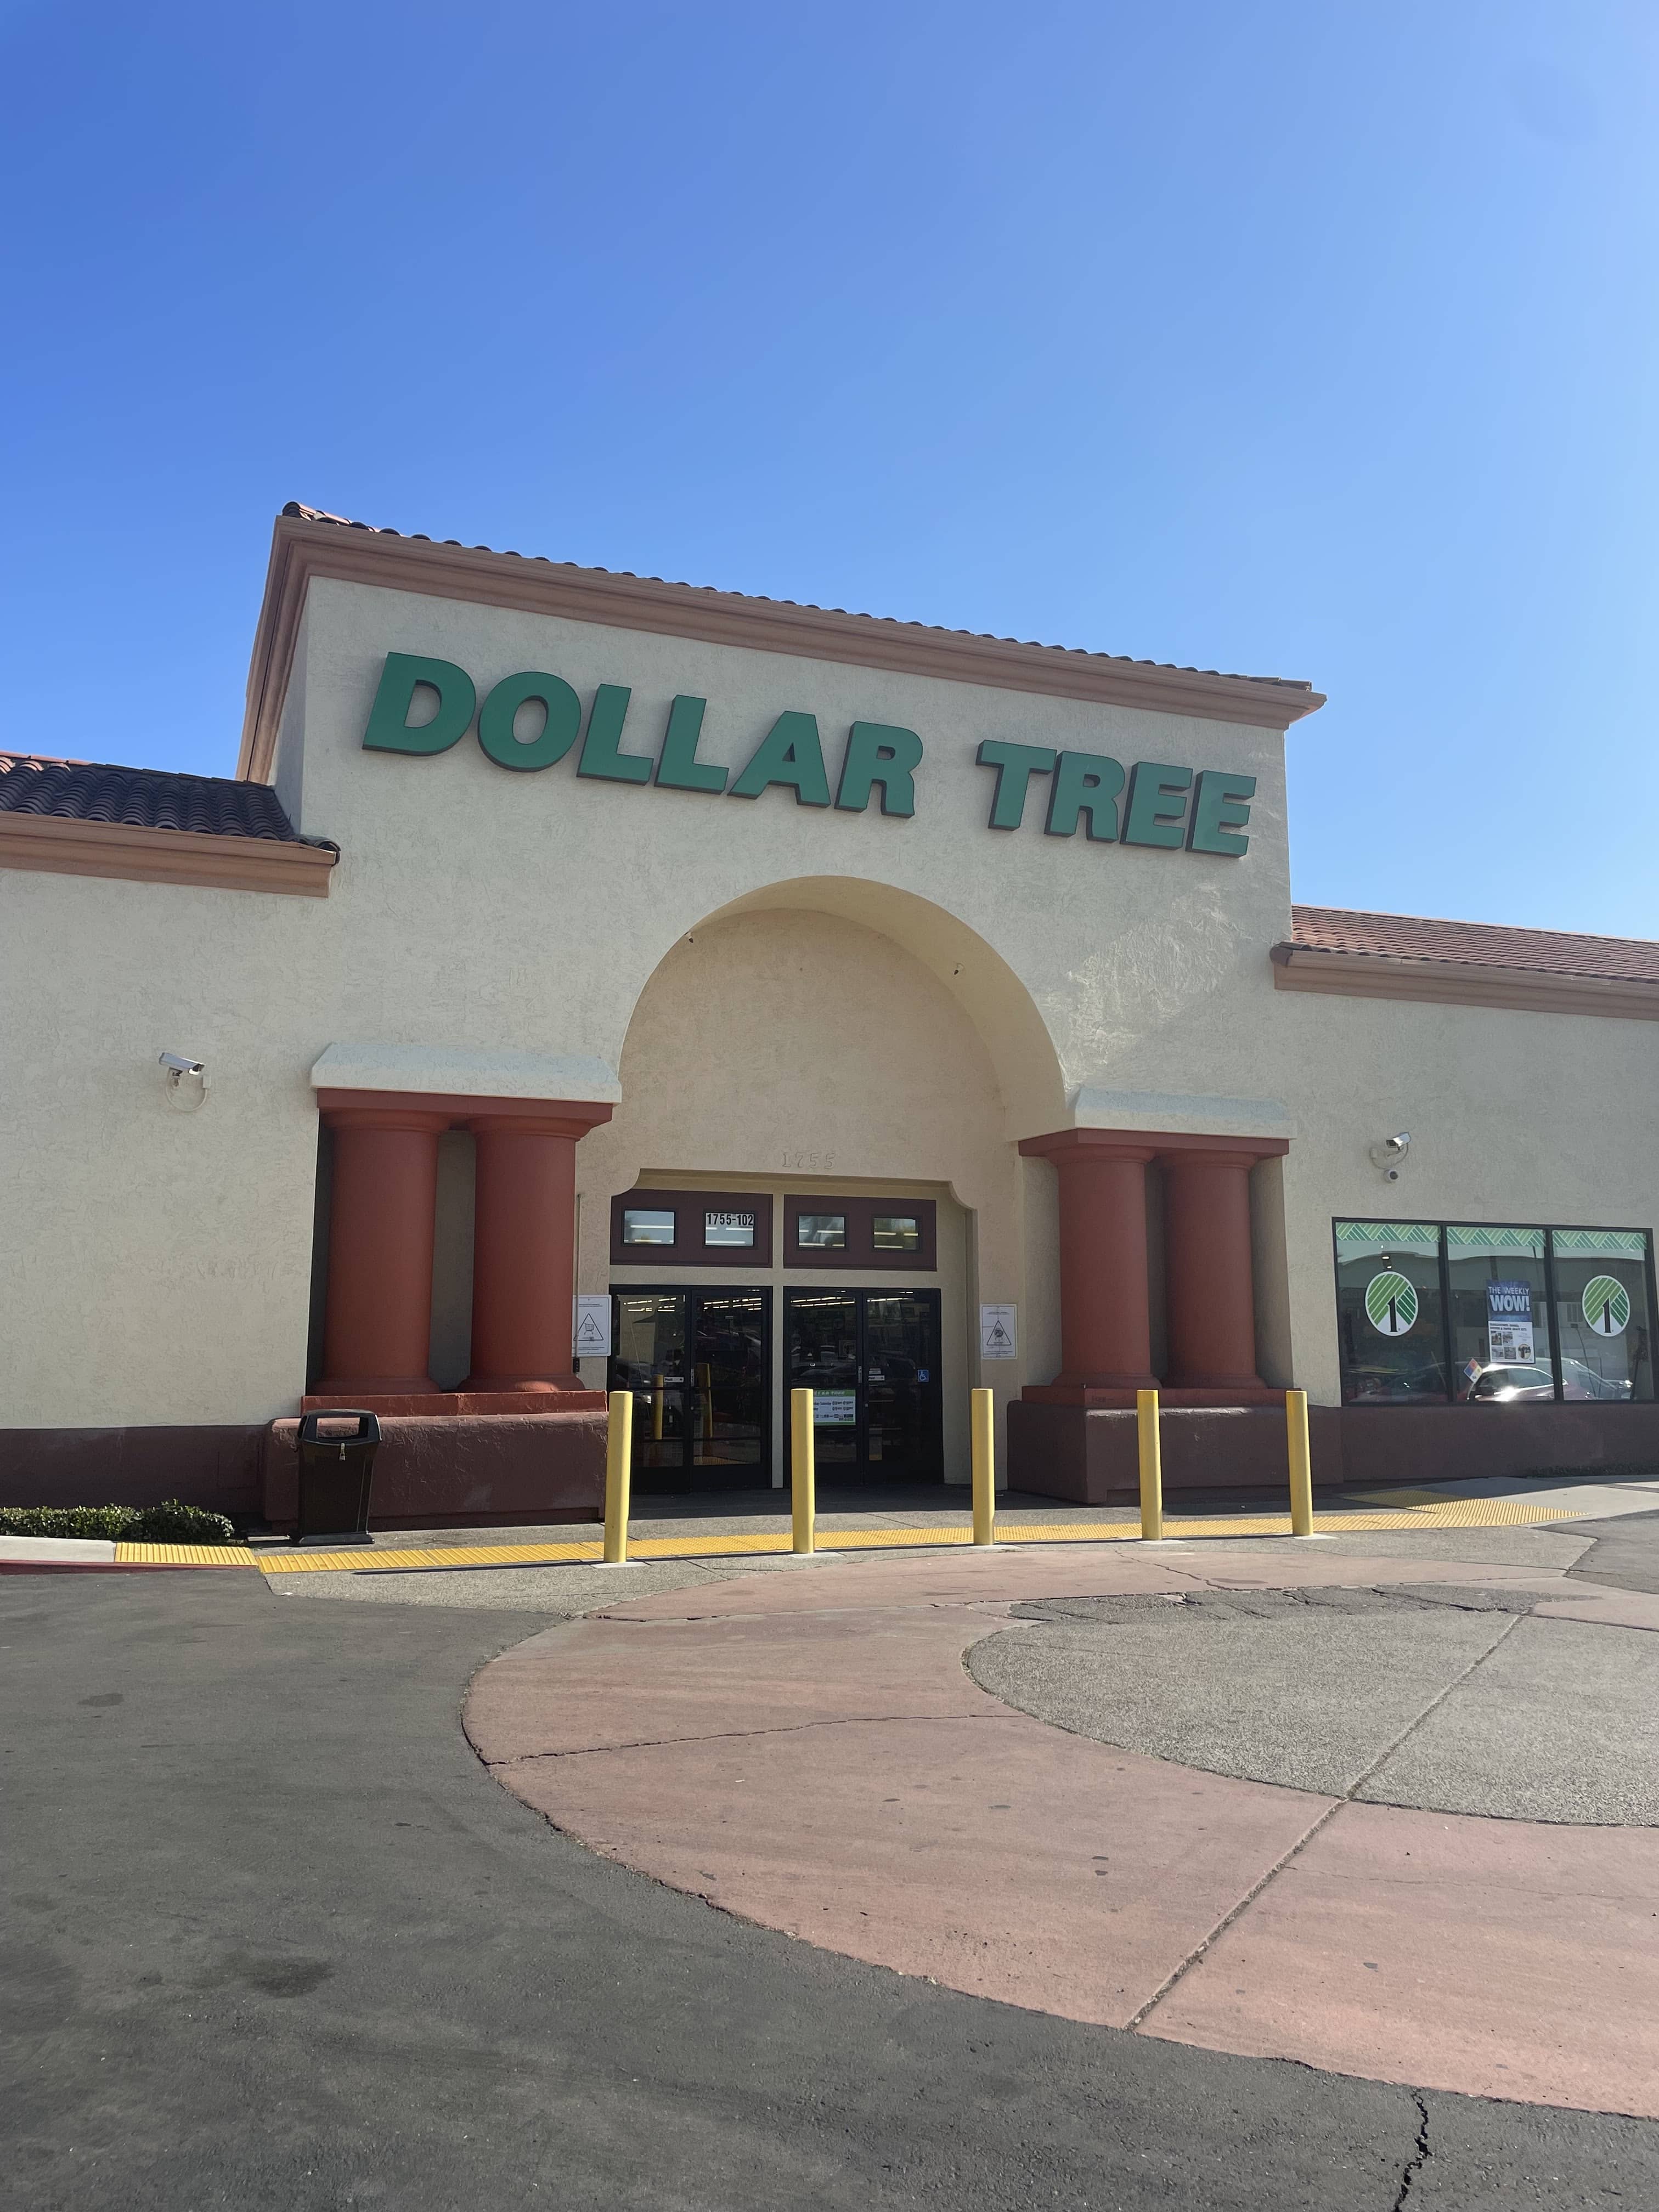 Dollar Tree - San Diego (CA 92105), US, toy store near me